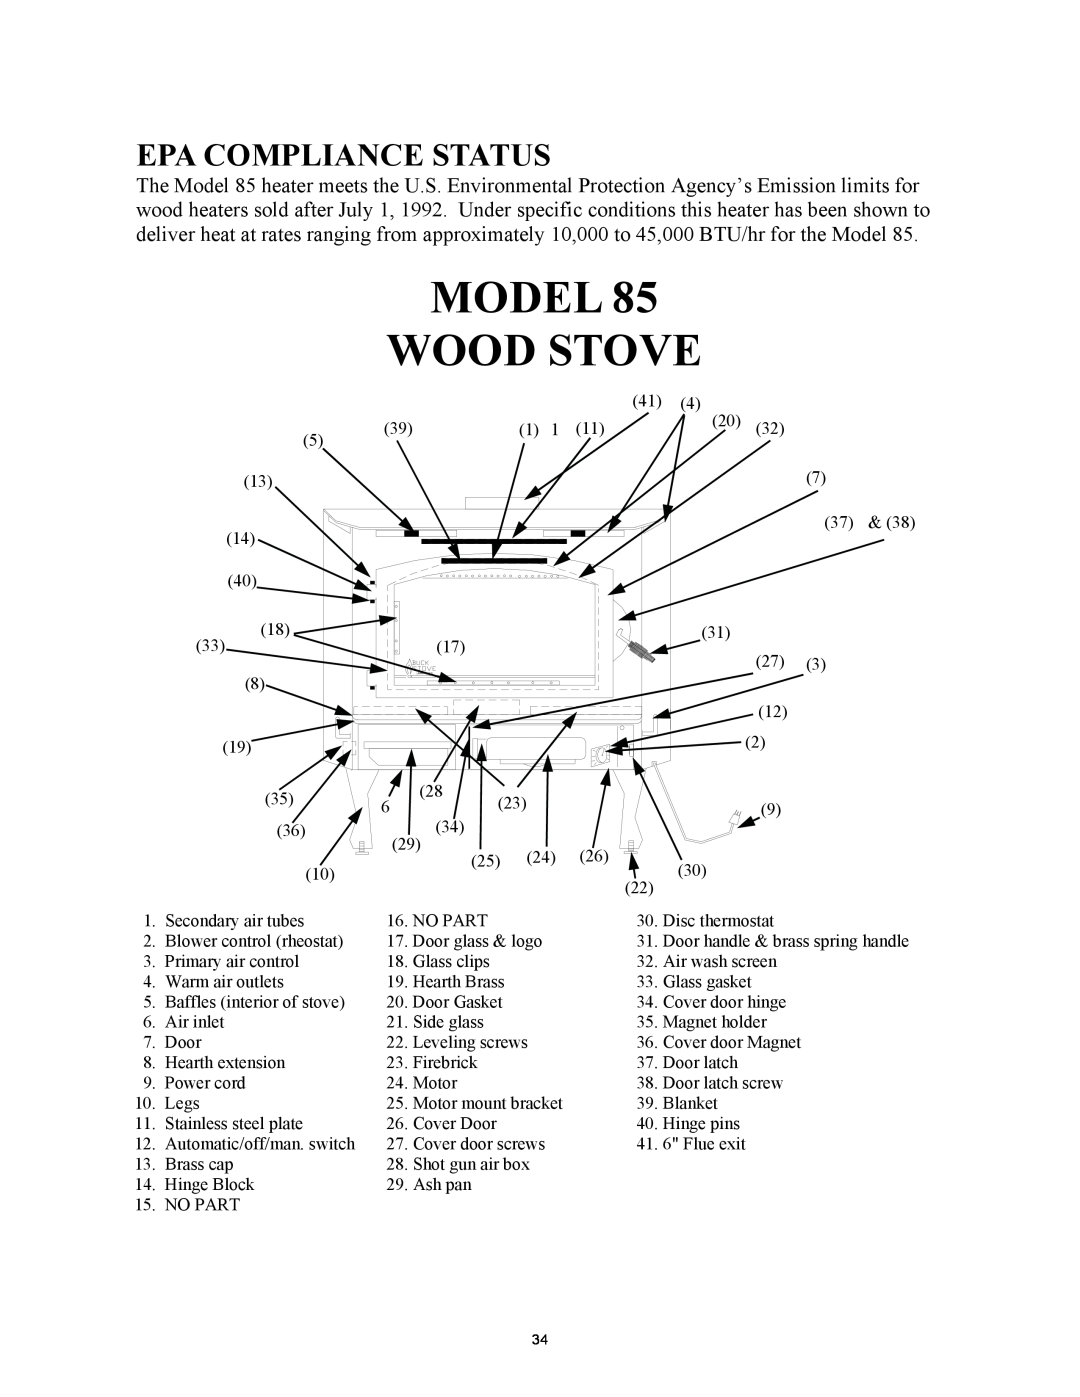 New Buck Corporation 85 installation instructions Epa Compliance Status, Model Wood Stove 